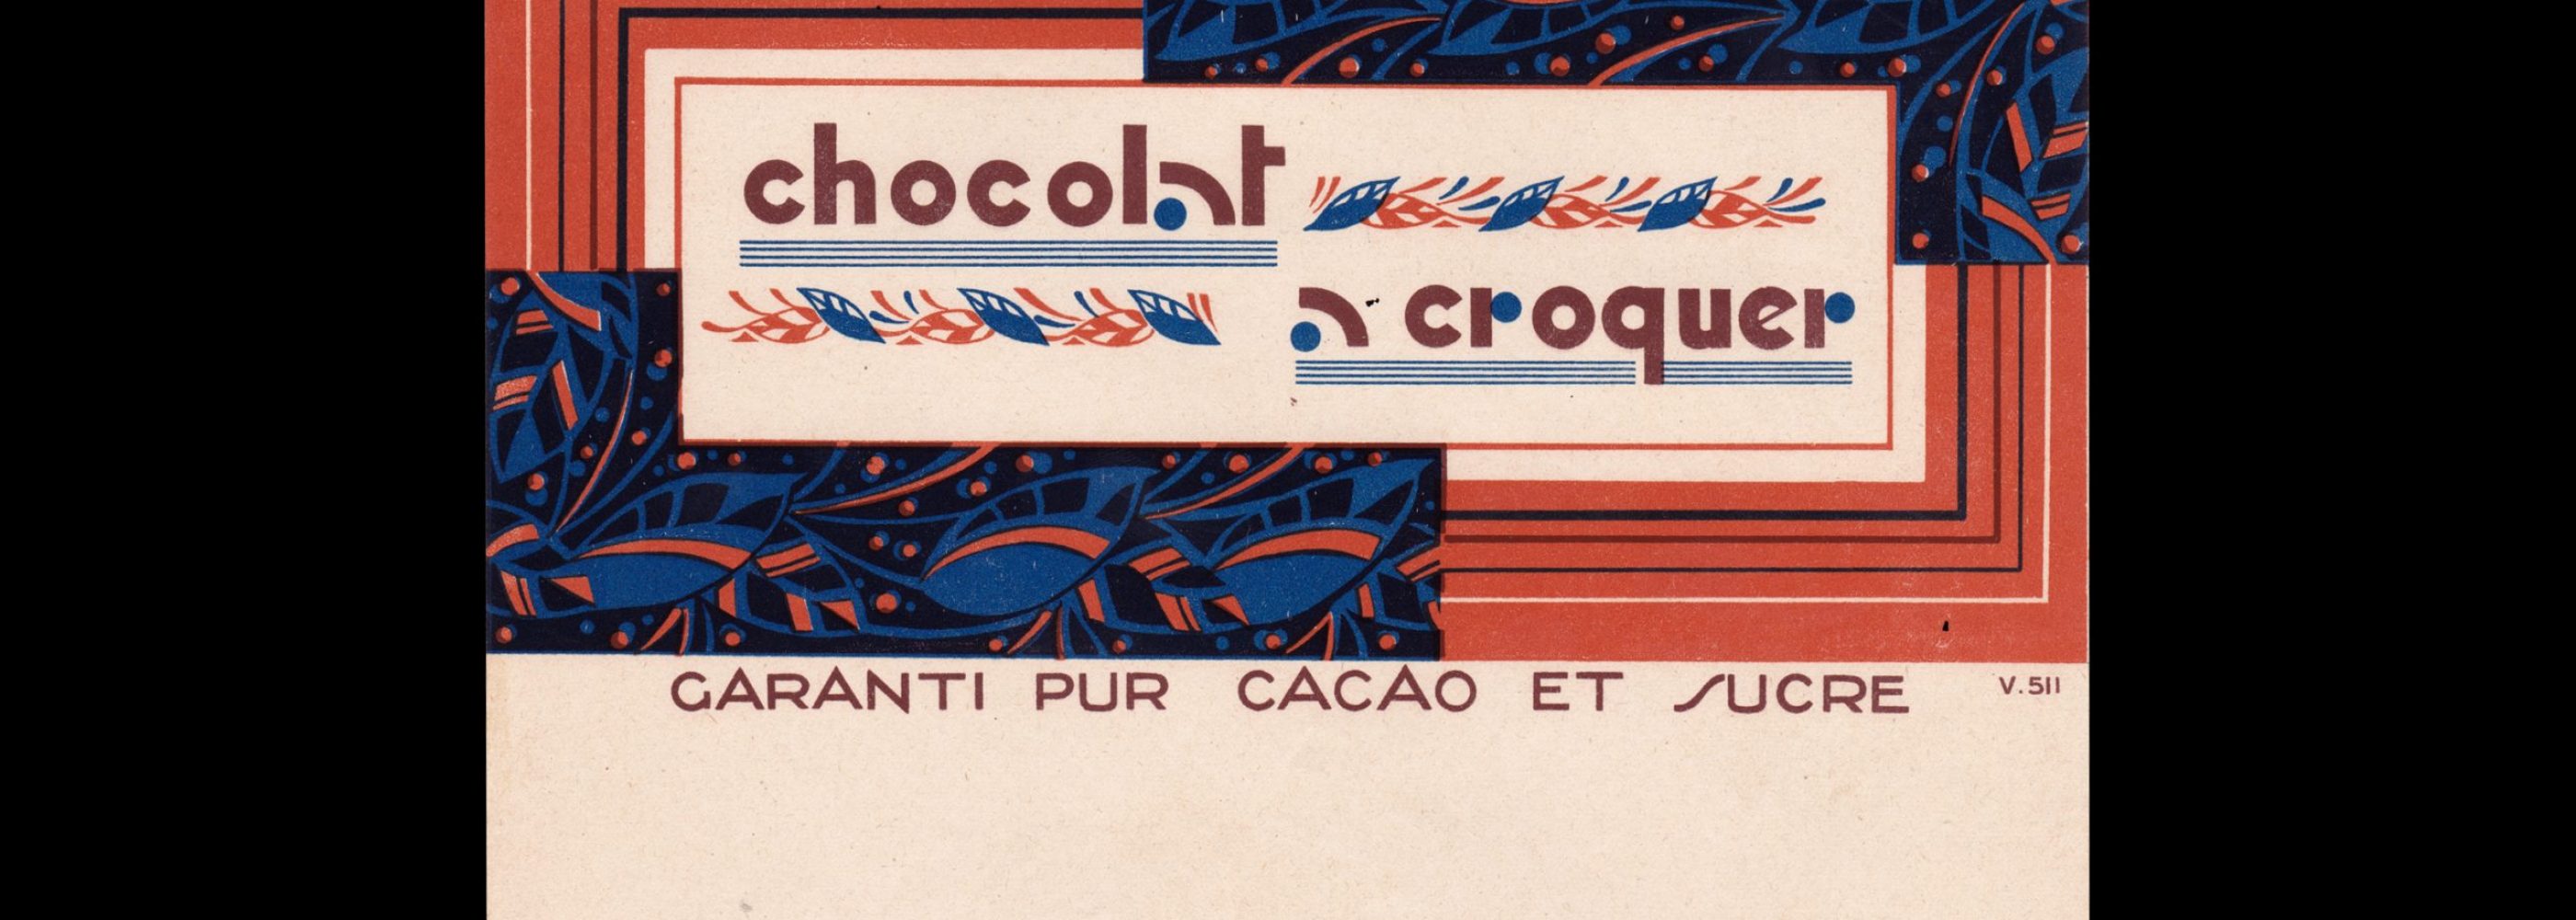 Chocolat Croquer vintage chocolate label